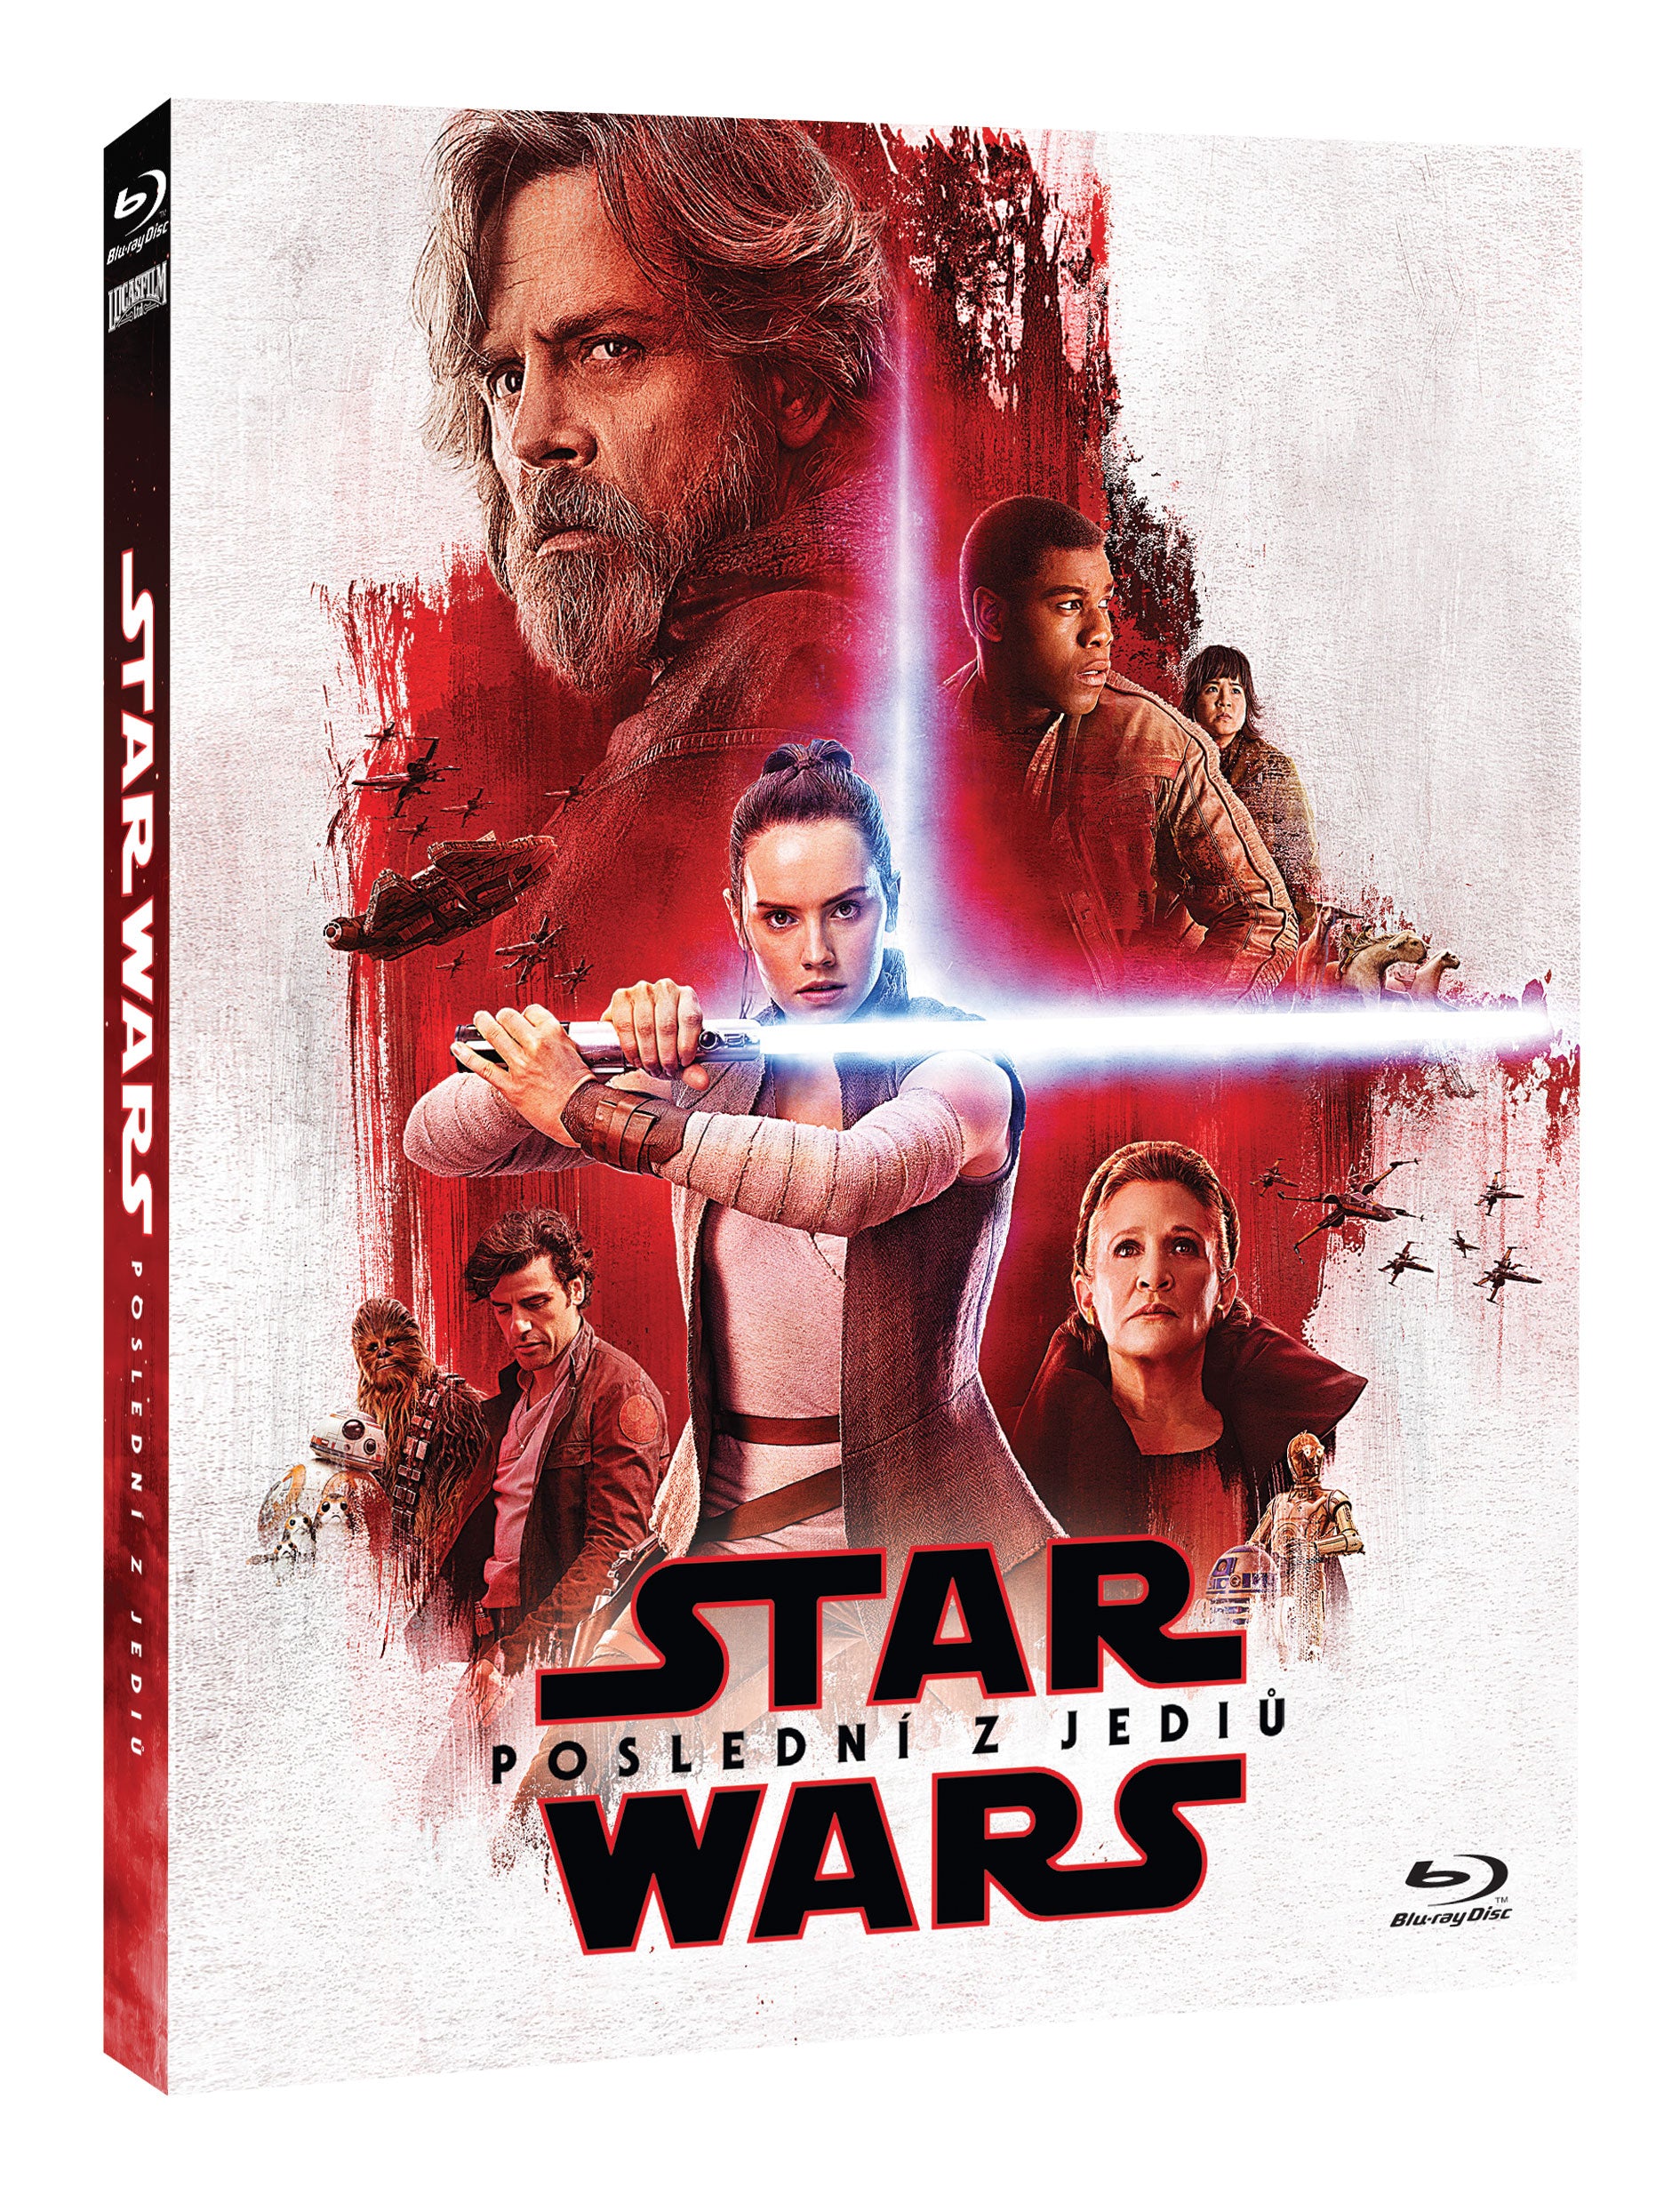 Star Wars: Posledni z Jediu 2BD (2D+bonus disk) - Limitovana edice Odpor BD / Star Wars: The Last Jedi - Limited Edition The Resistance - Czech version